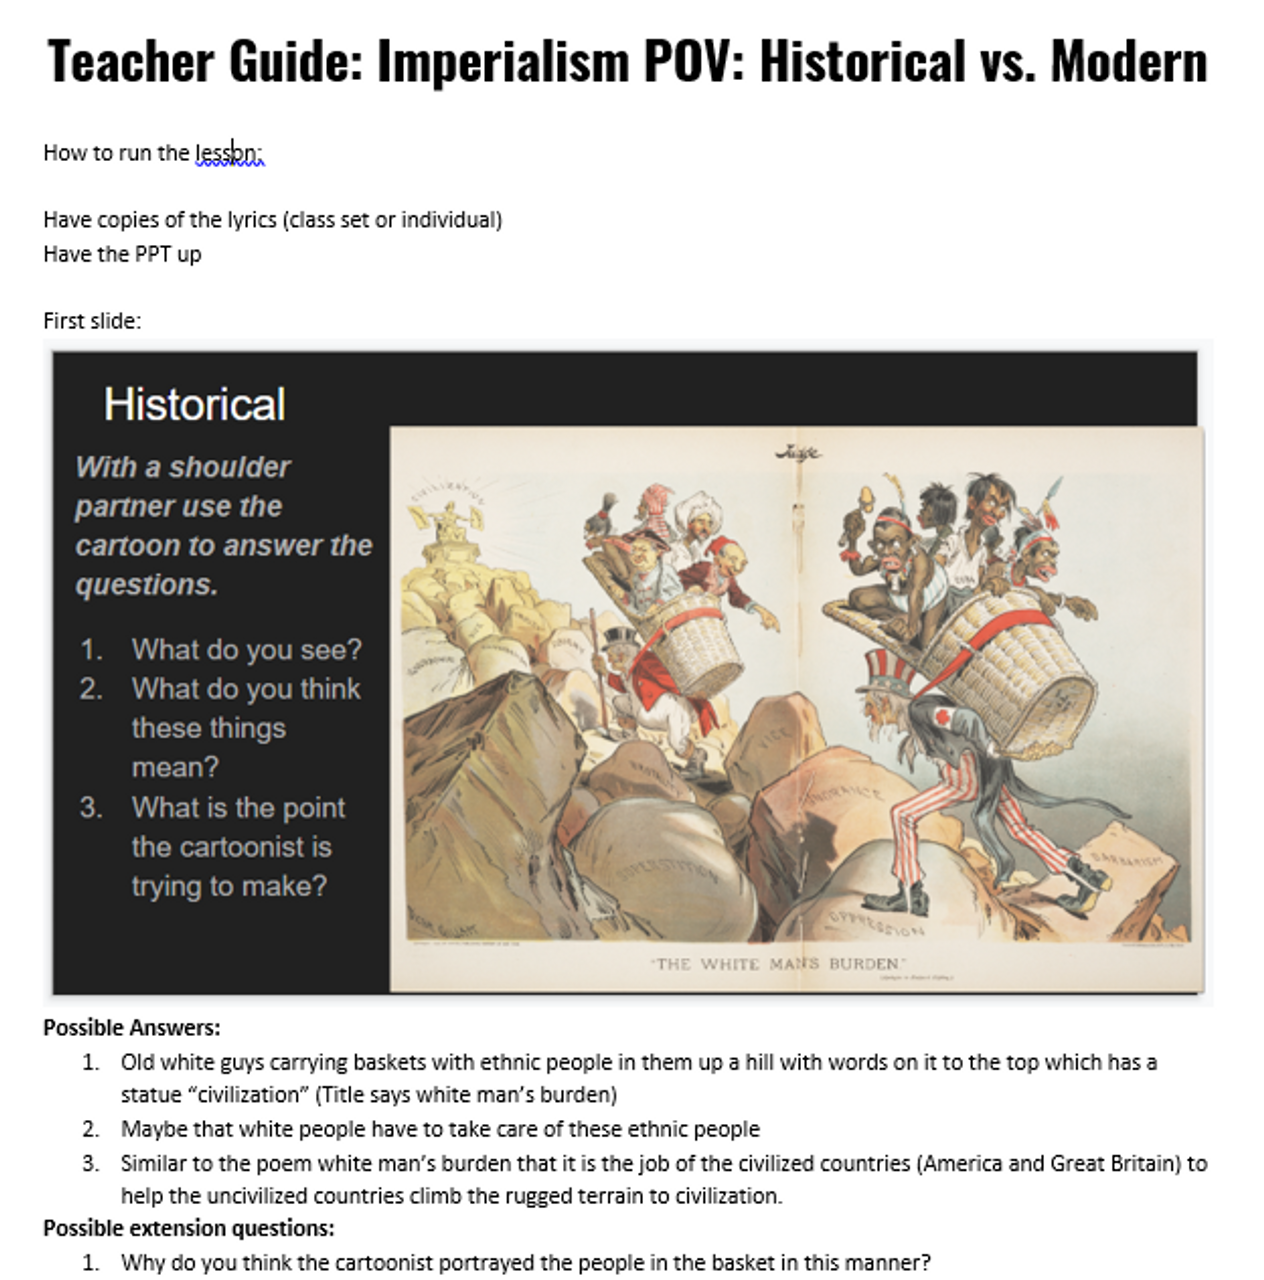 Imperialism POV: Historical vs. Modern